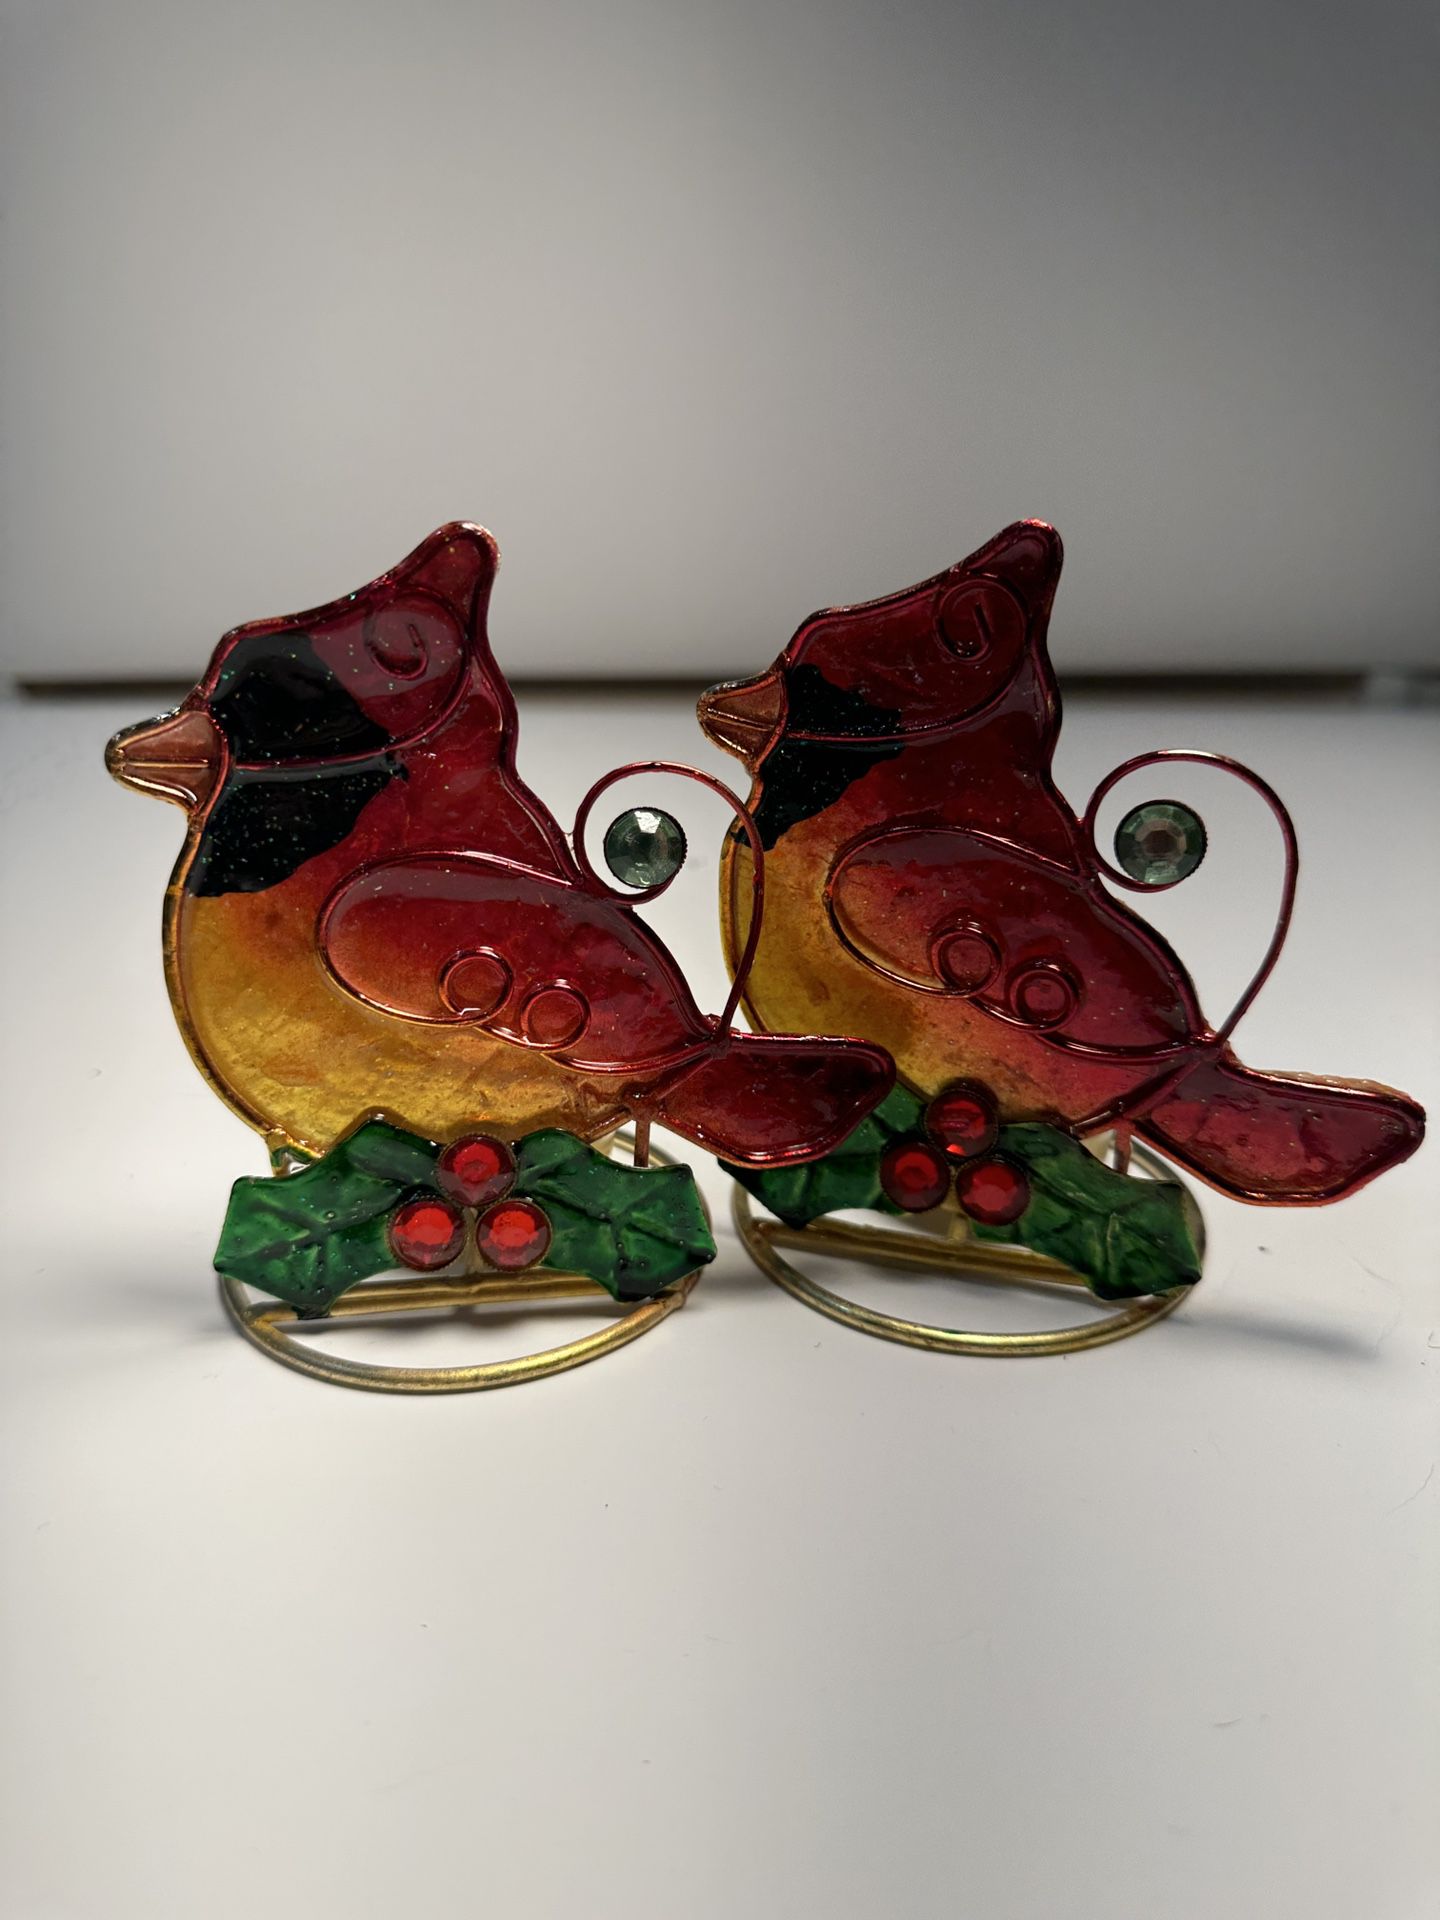 Two Cardinal Tea Light Holders 